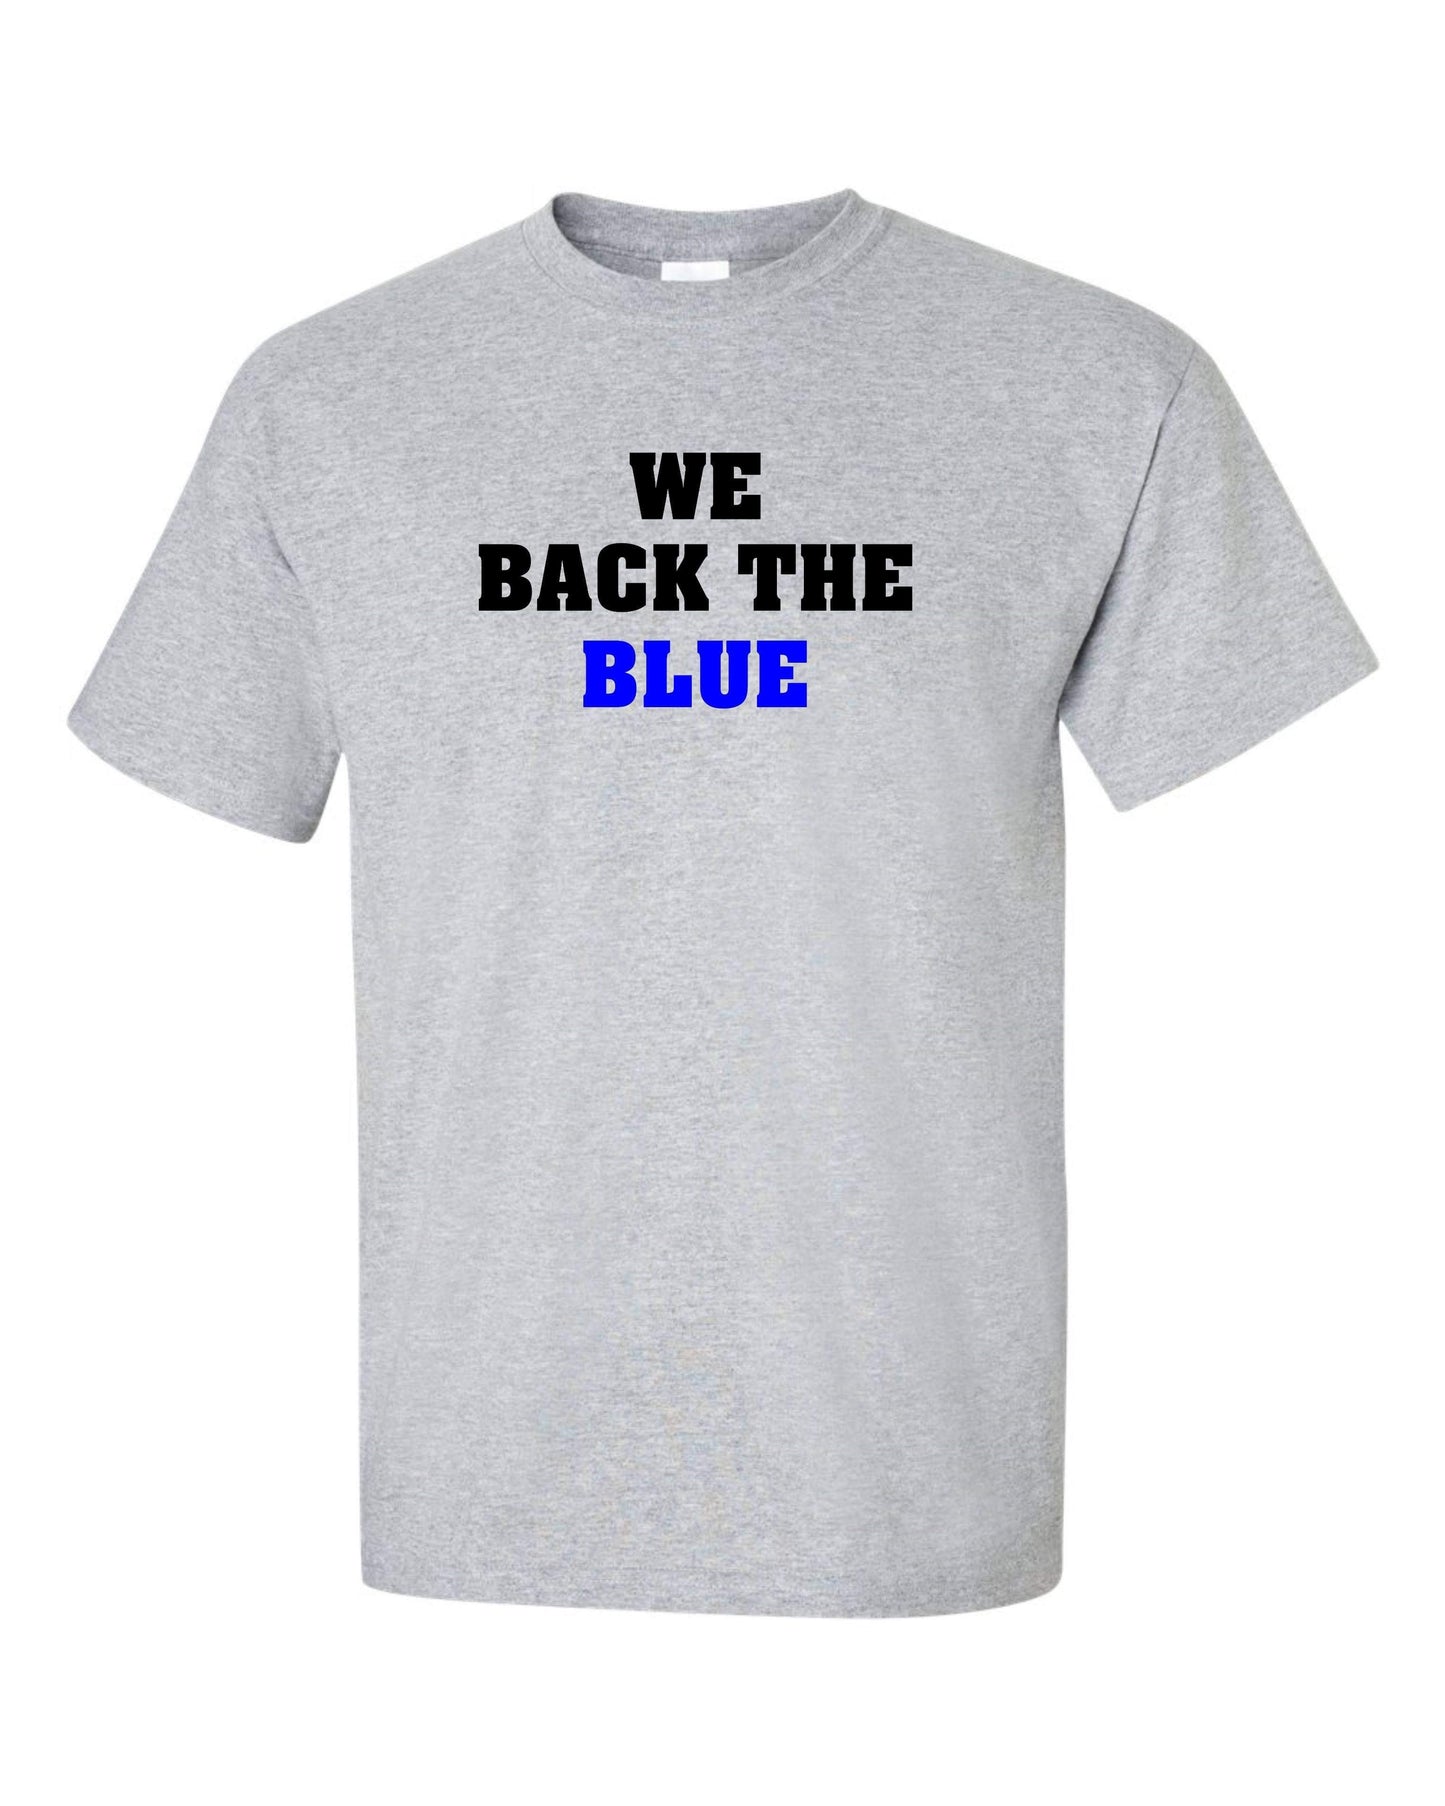 We Back the Blue